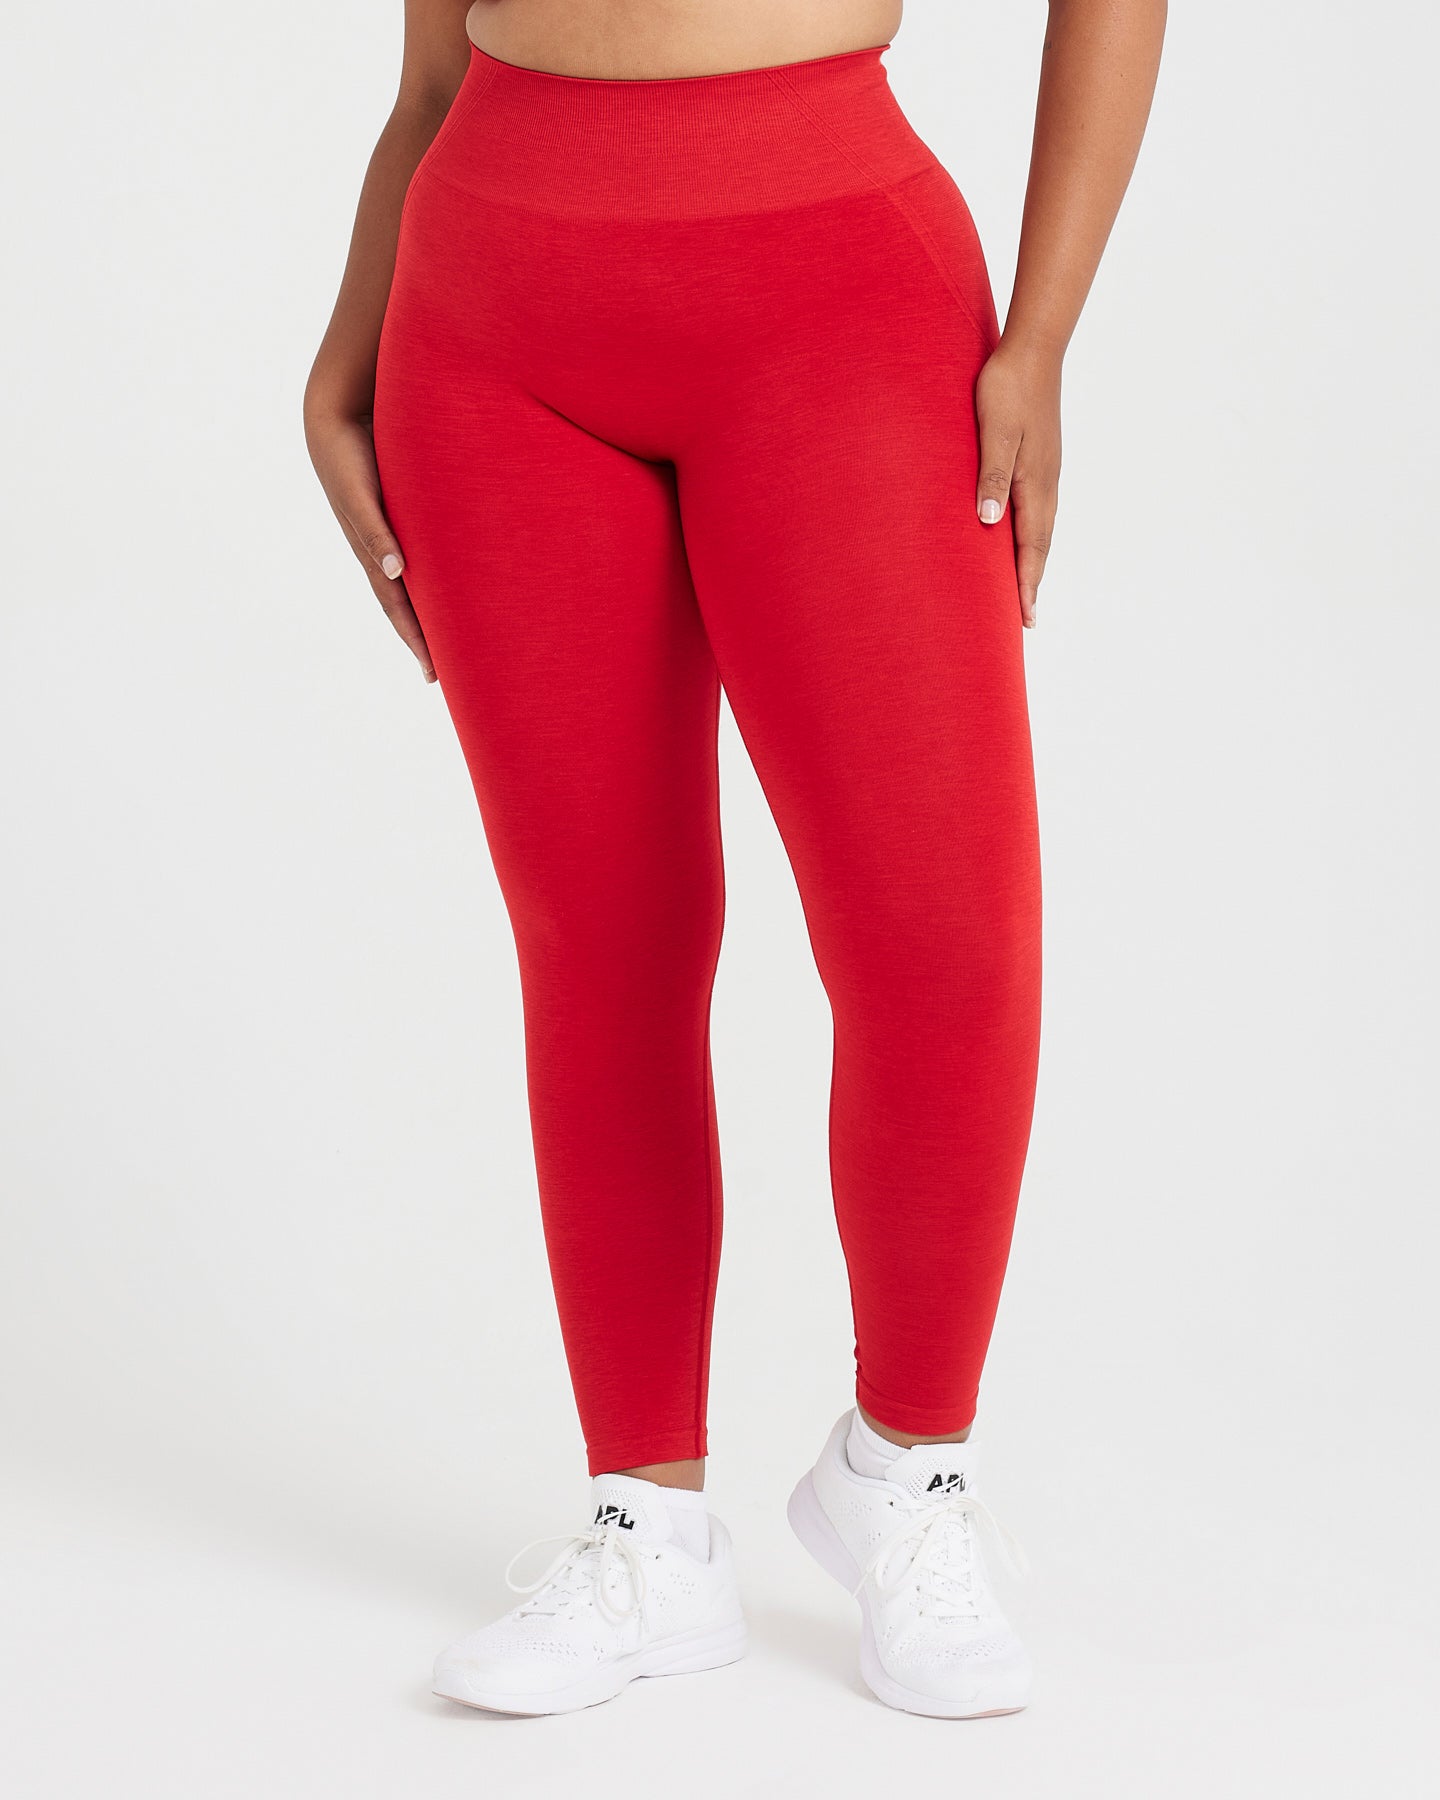 Red hot spanx leggings/1000 - Gem